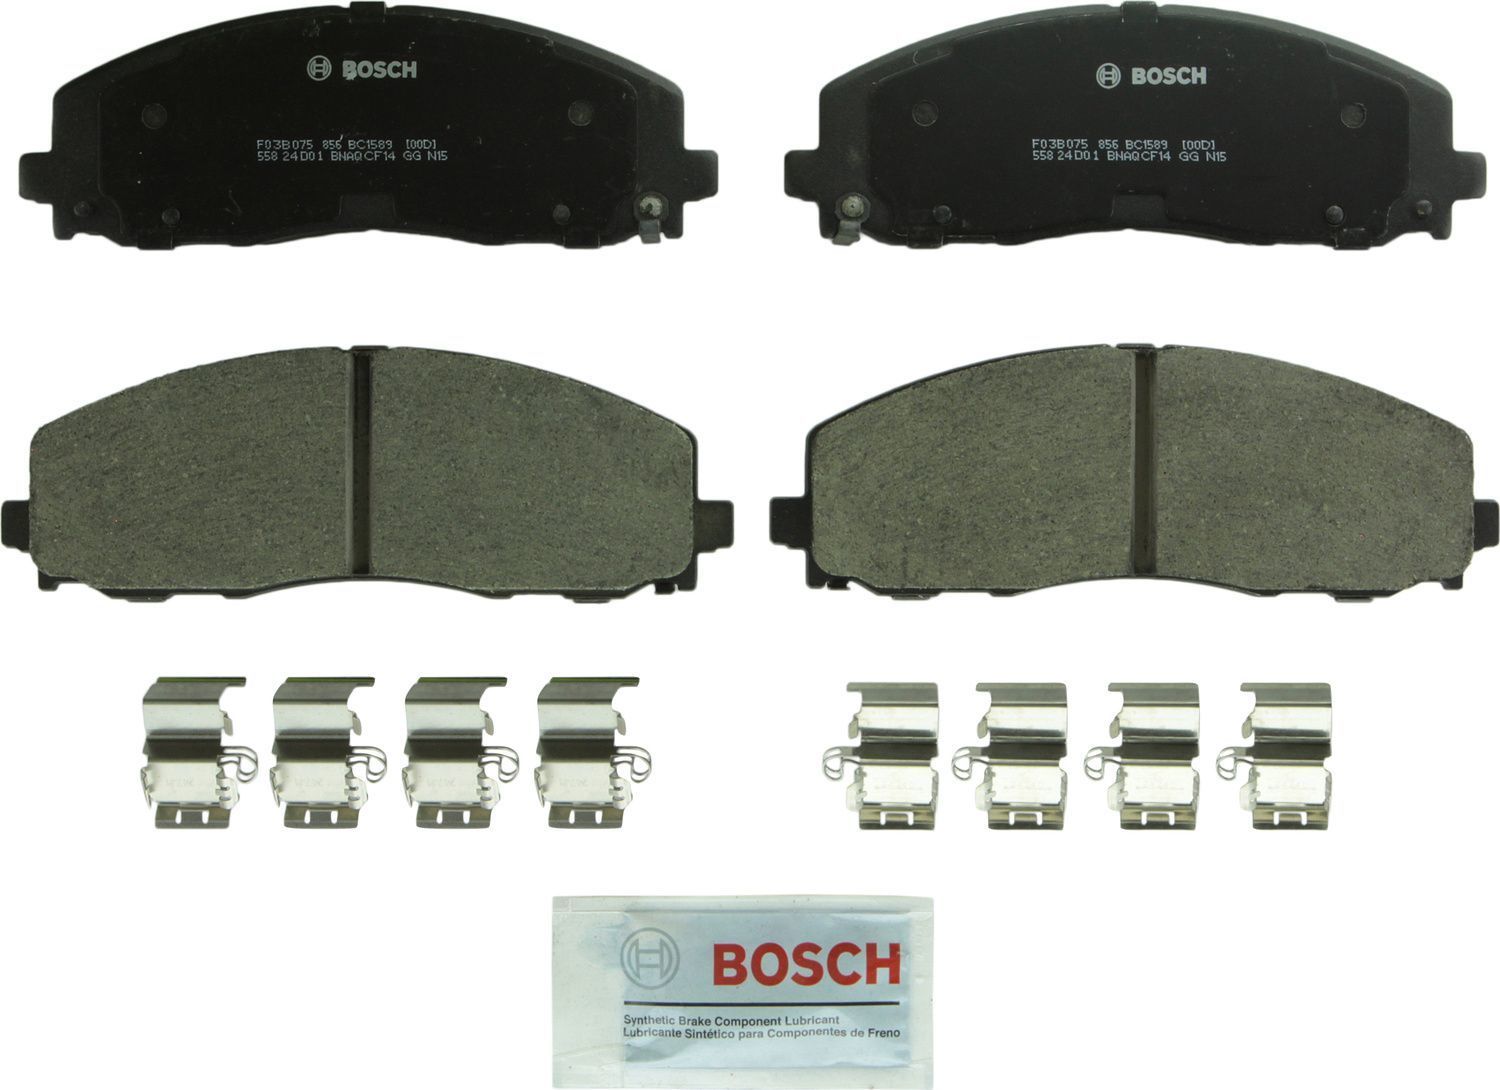 BOSCH BRAKE - Bosch QuietCast Brake Pad Ceramic Brake Pads (Front) - BQC BC1589